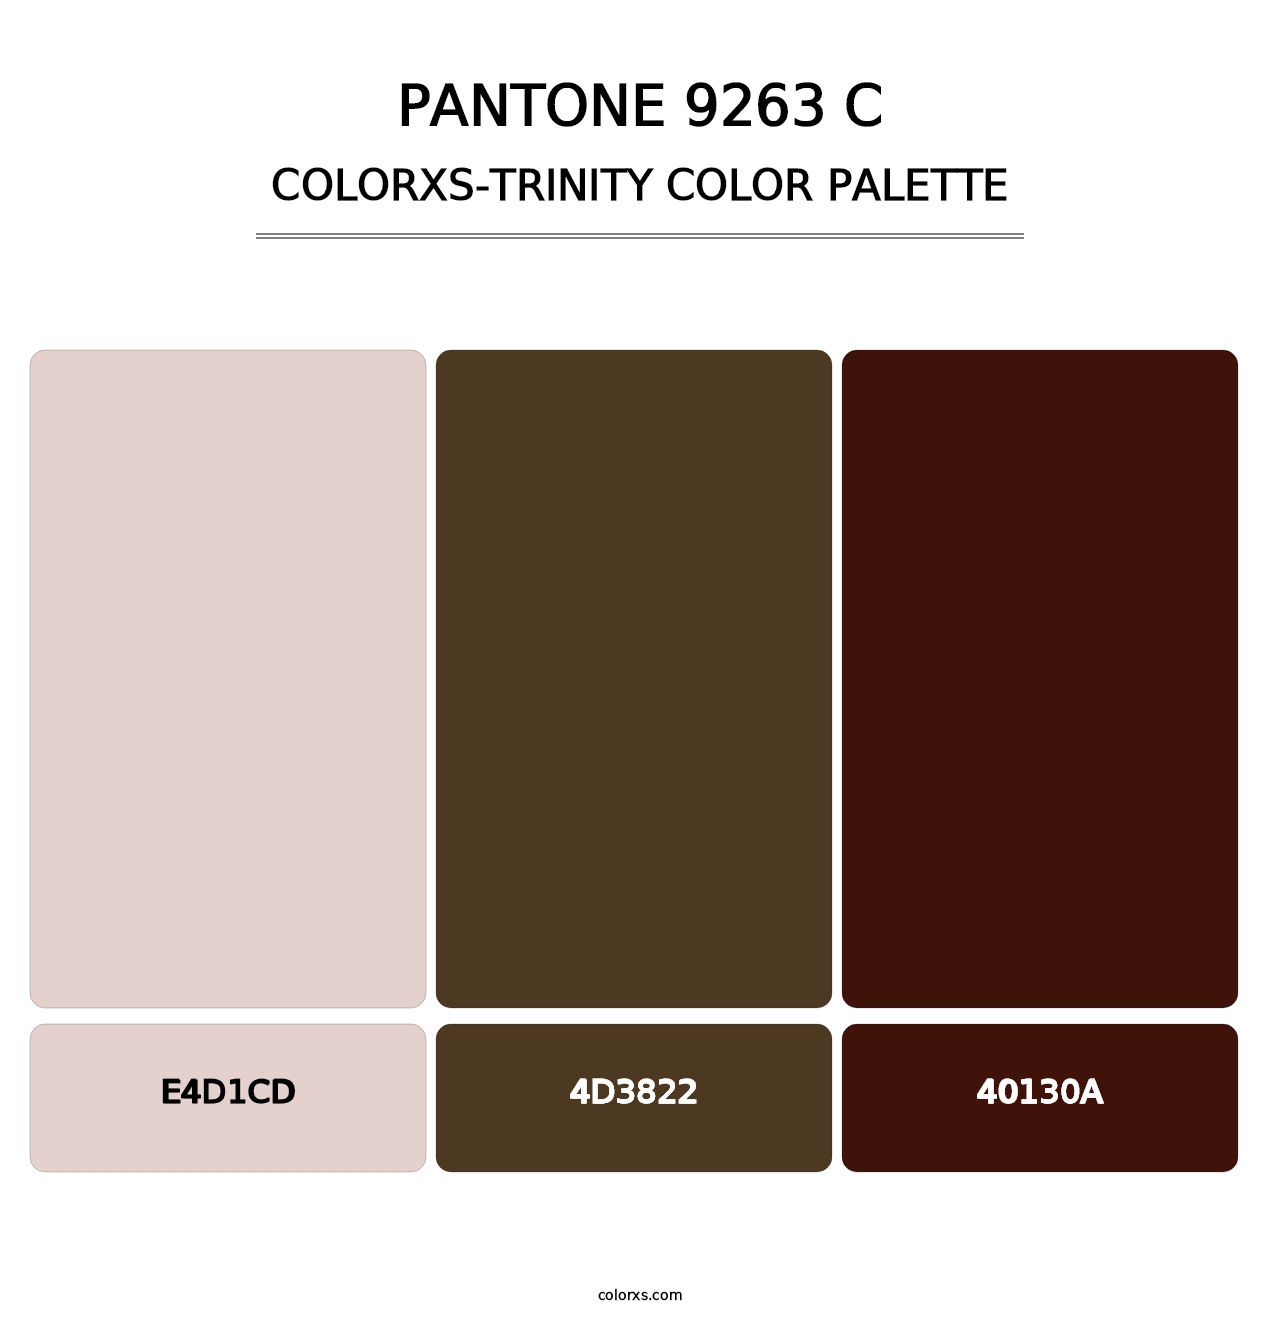 PANTONE 9263 C - Colorxs Trinity Palette